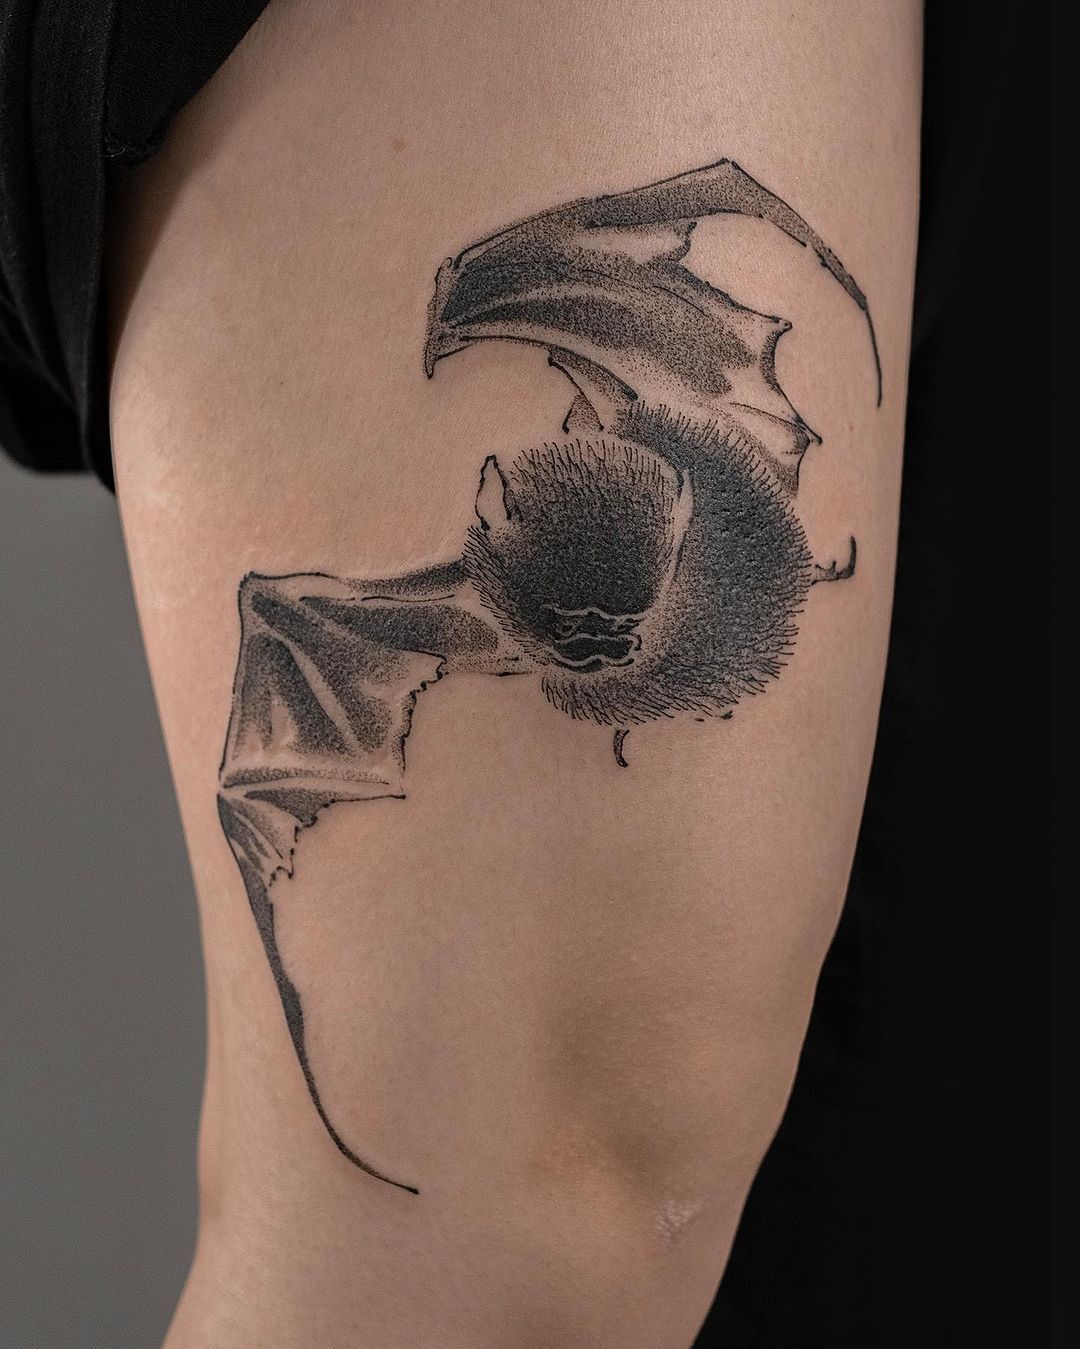 Destiny Tattoo - Small bat symbol by Nicolau Konstantinos @isshun_sengeki  #batsymbol #batman #batmantattoo #tattoo #tattoos #tattooart #blackwork  #solidtattoo #boyswithtattoos #inkedup #inked #follow #followus  #destinytattoo #neasmyrni #athens #greece ...